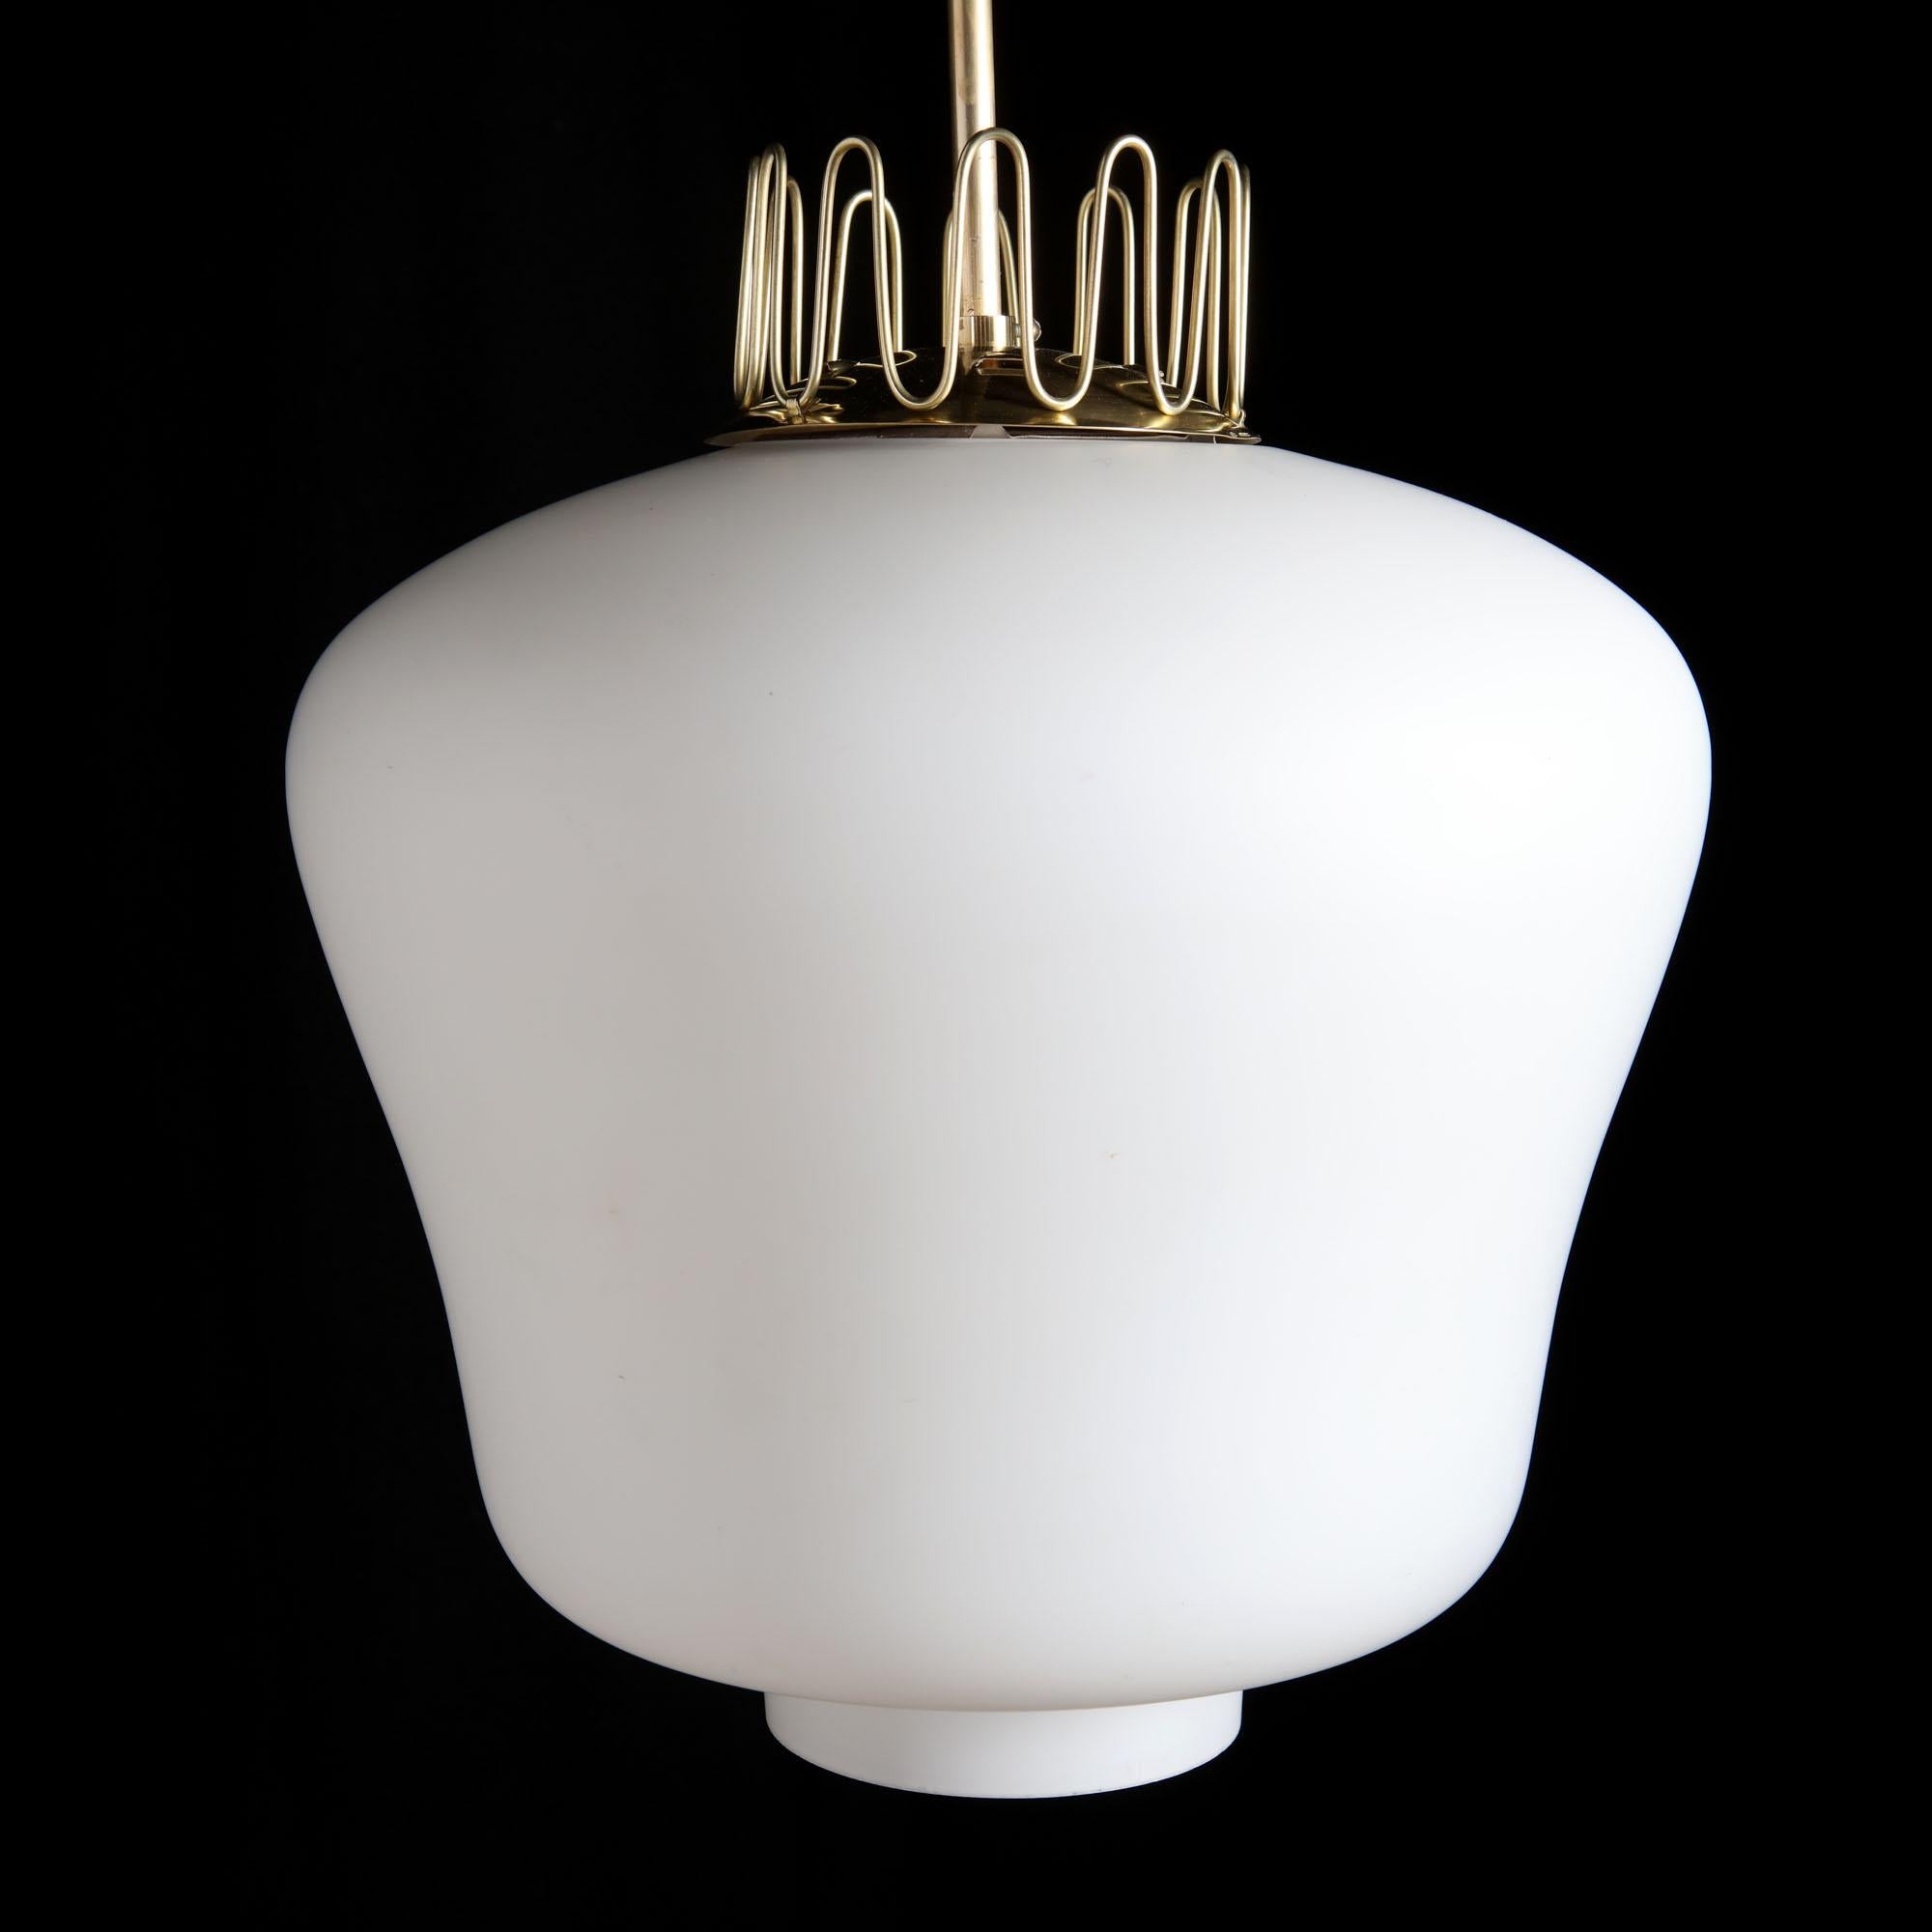 20th Century 1940s Swedish Modern Glass and Brass Hanging Pendant Light